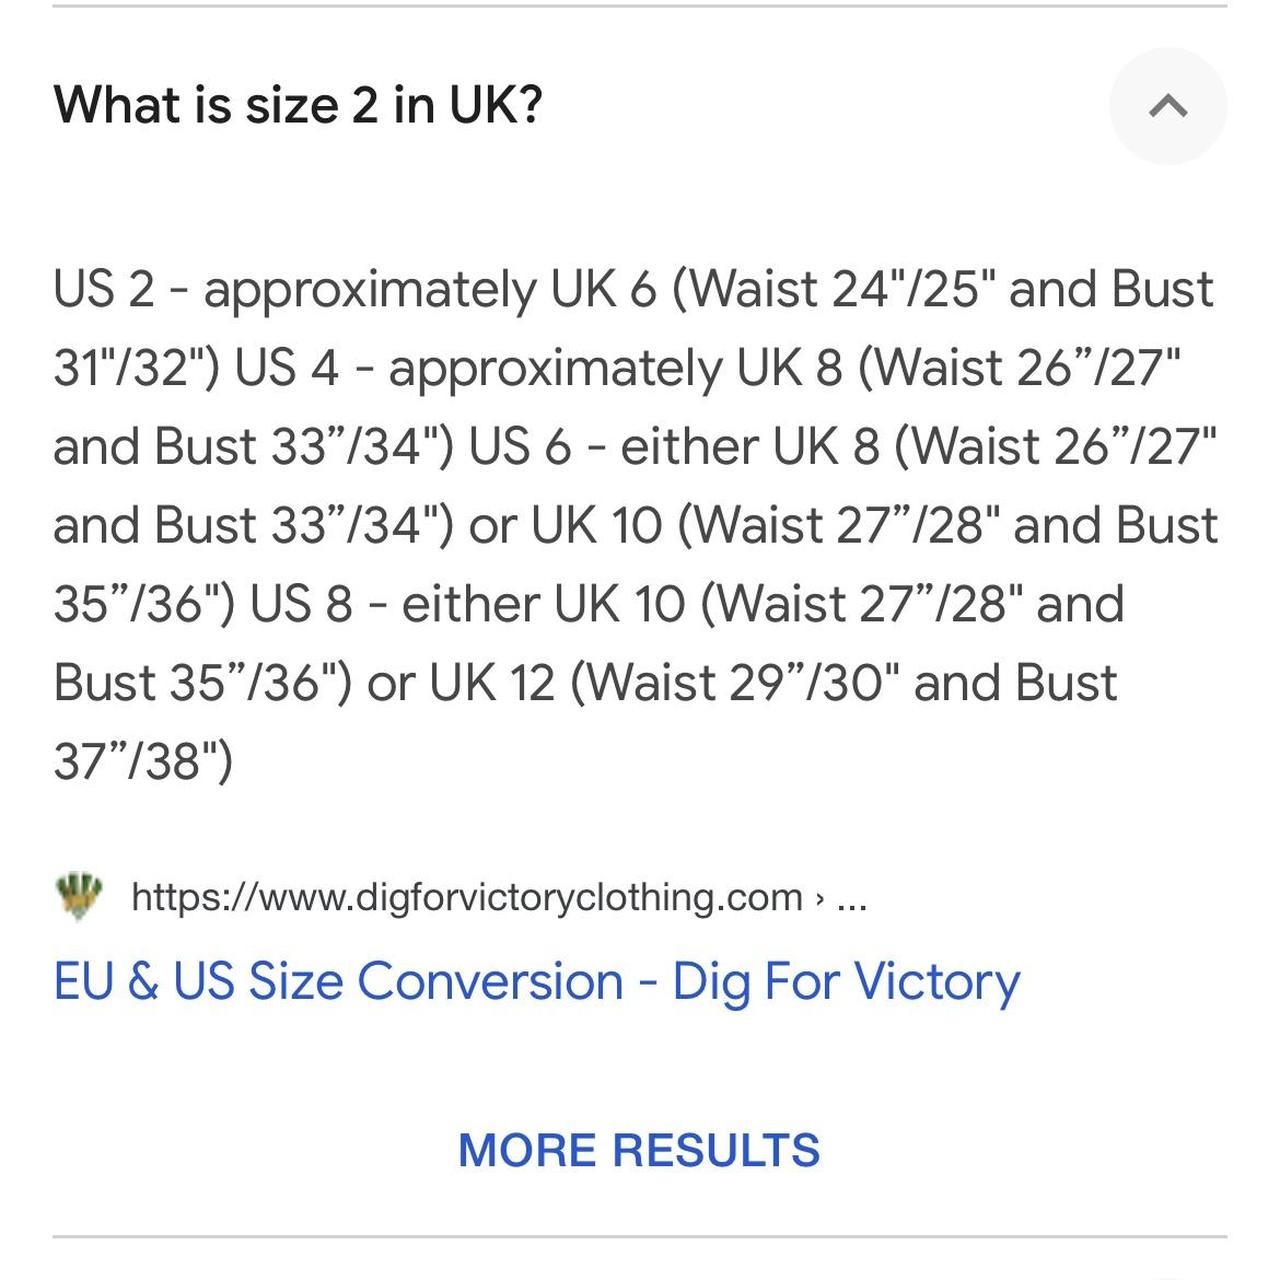 EU & US Size Conversion